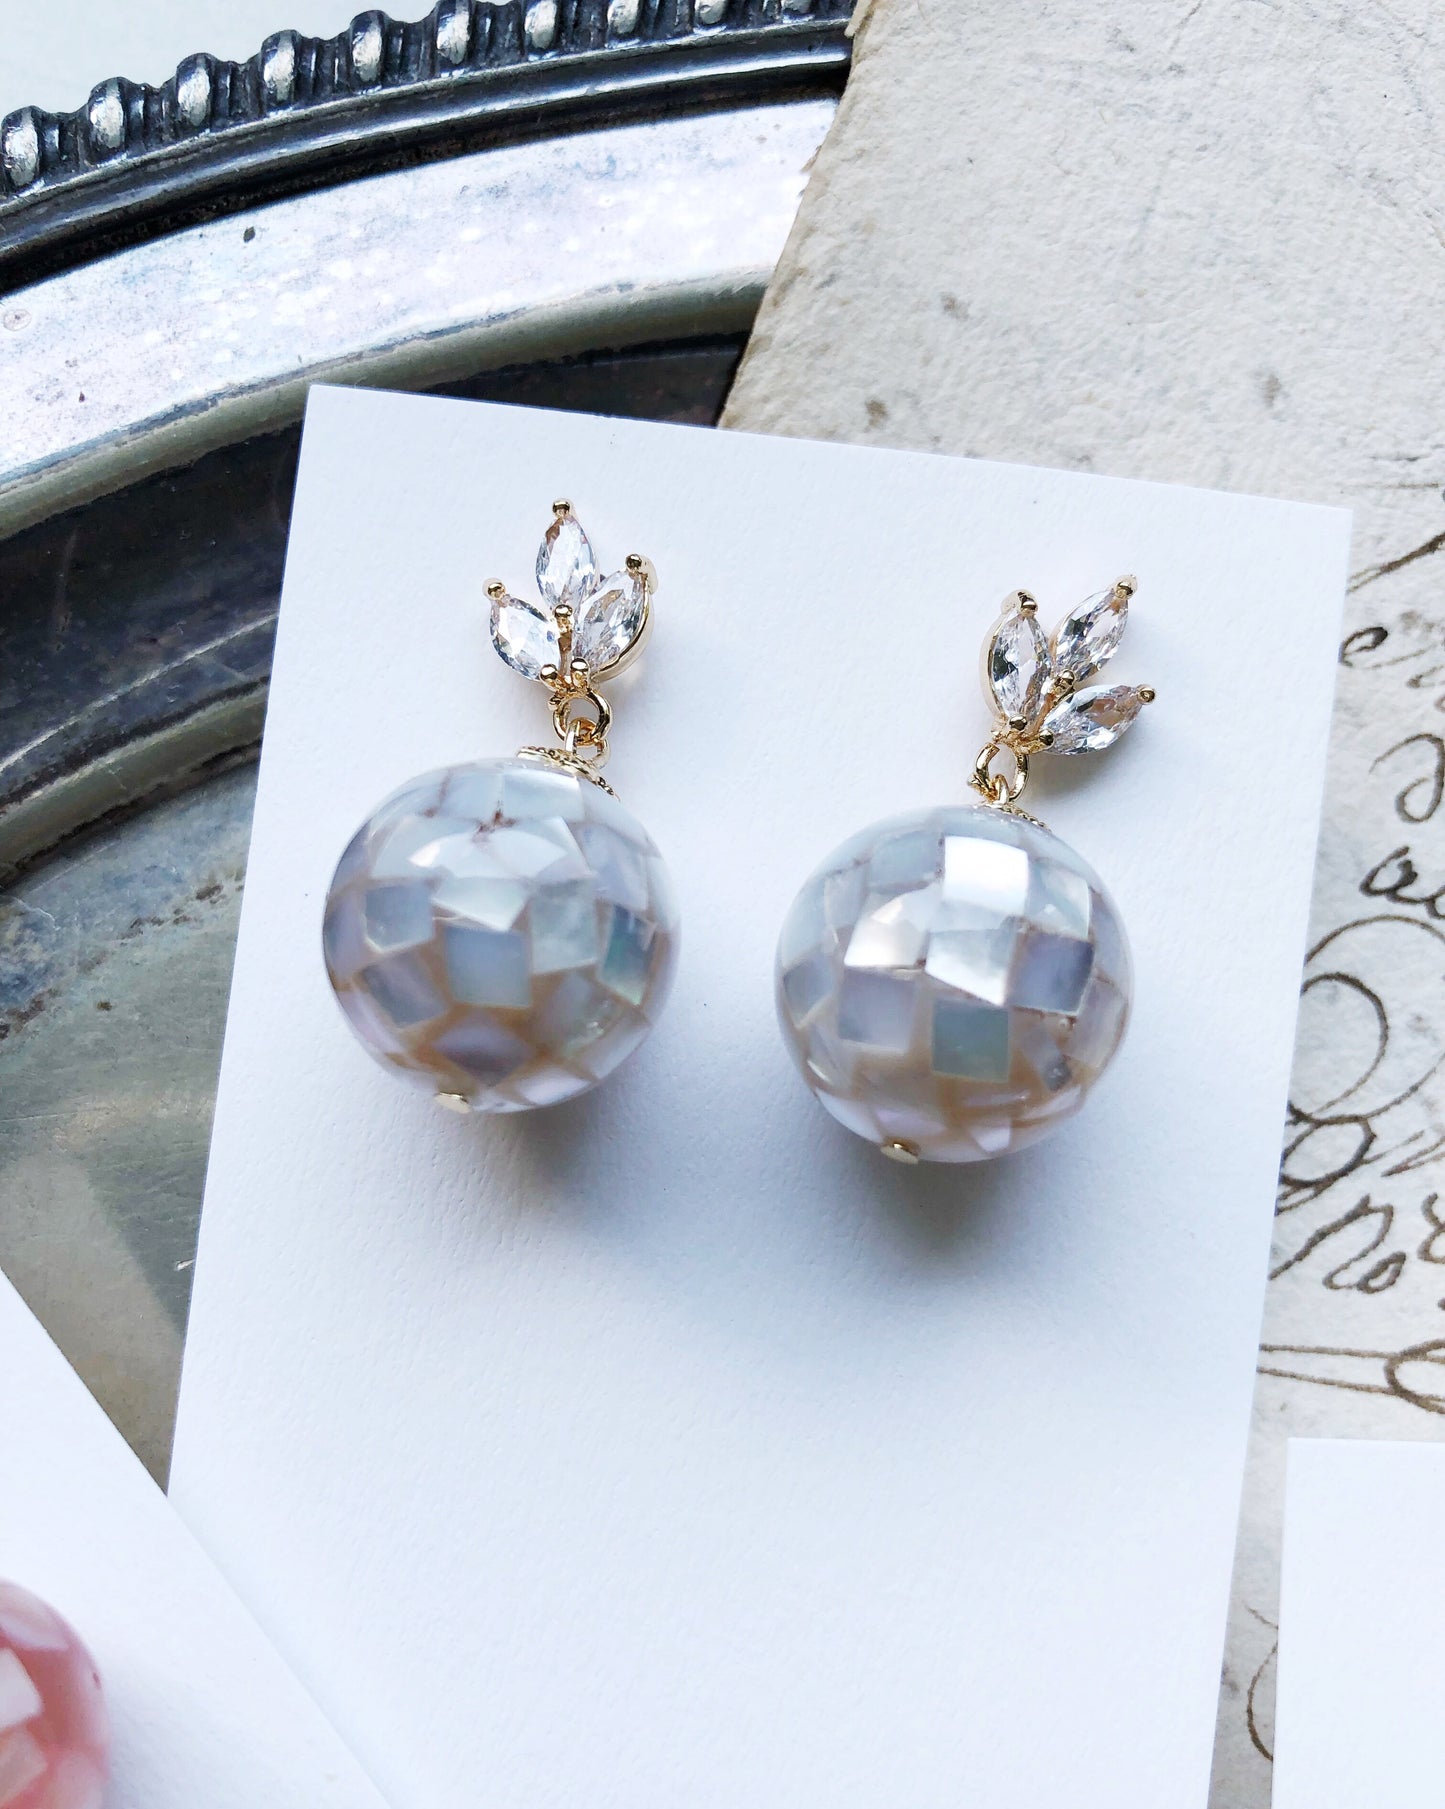 Seashell mosaic bubbles glass beads earrings in pale yellow